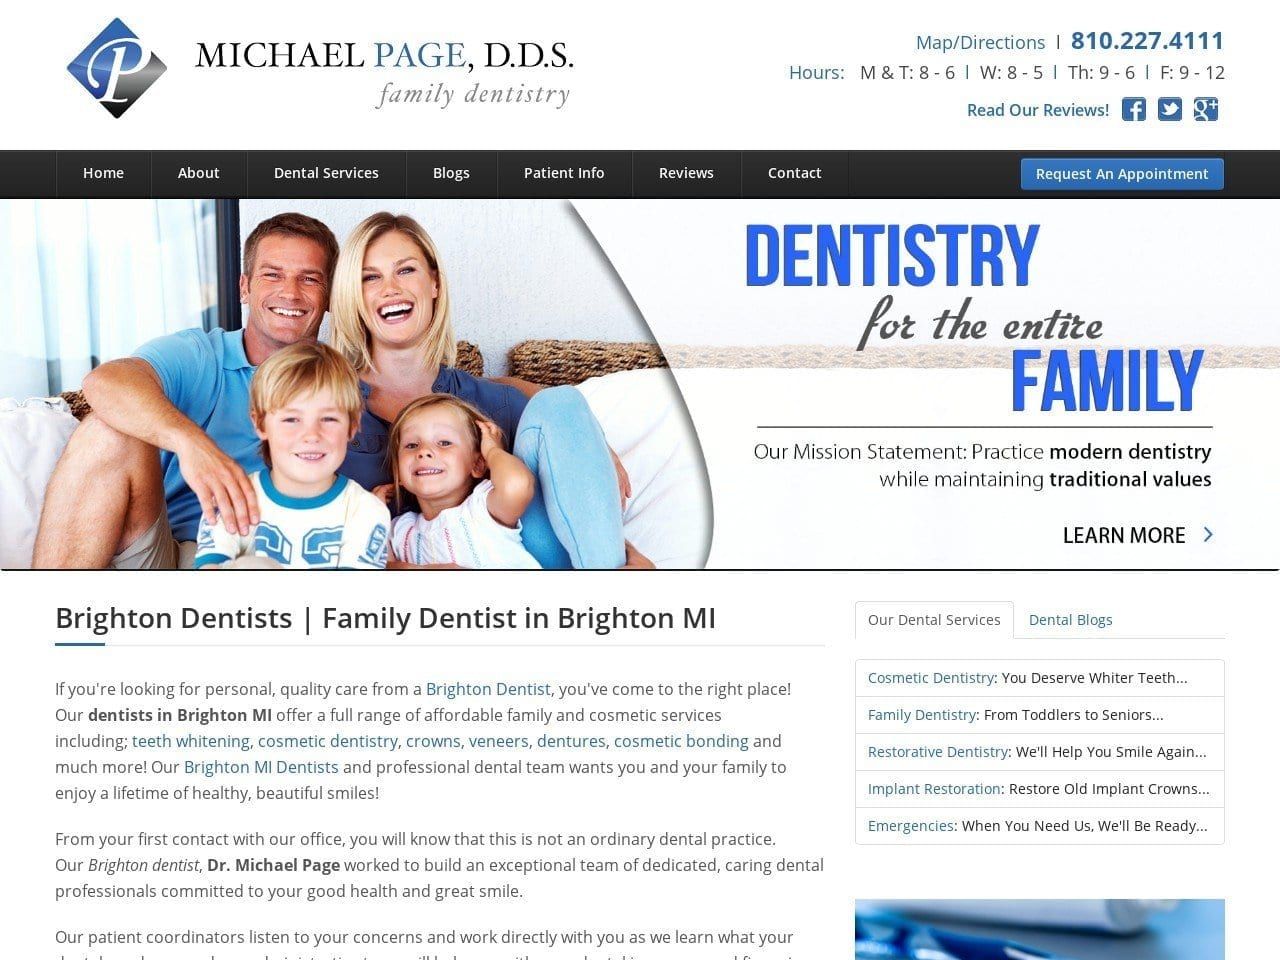 Dr. Michael Page DDS Website Screenshot from michaelpagedds.com